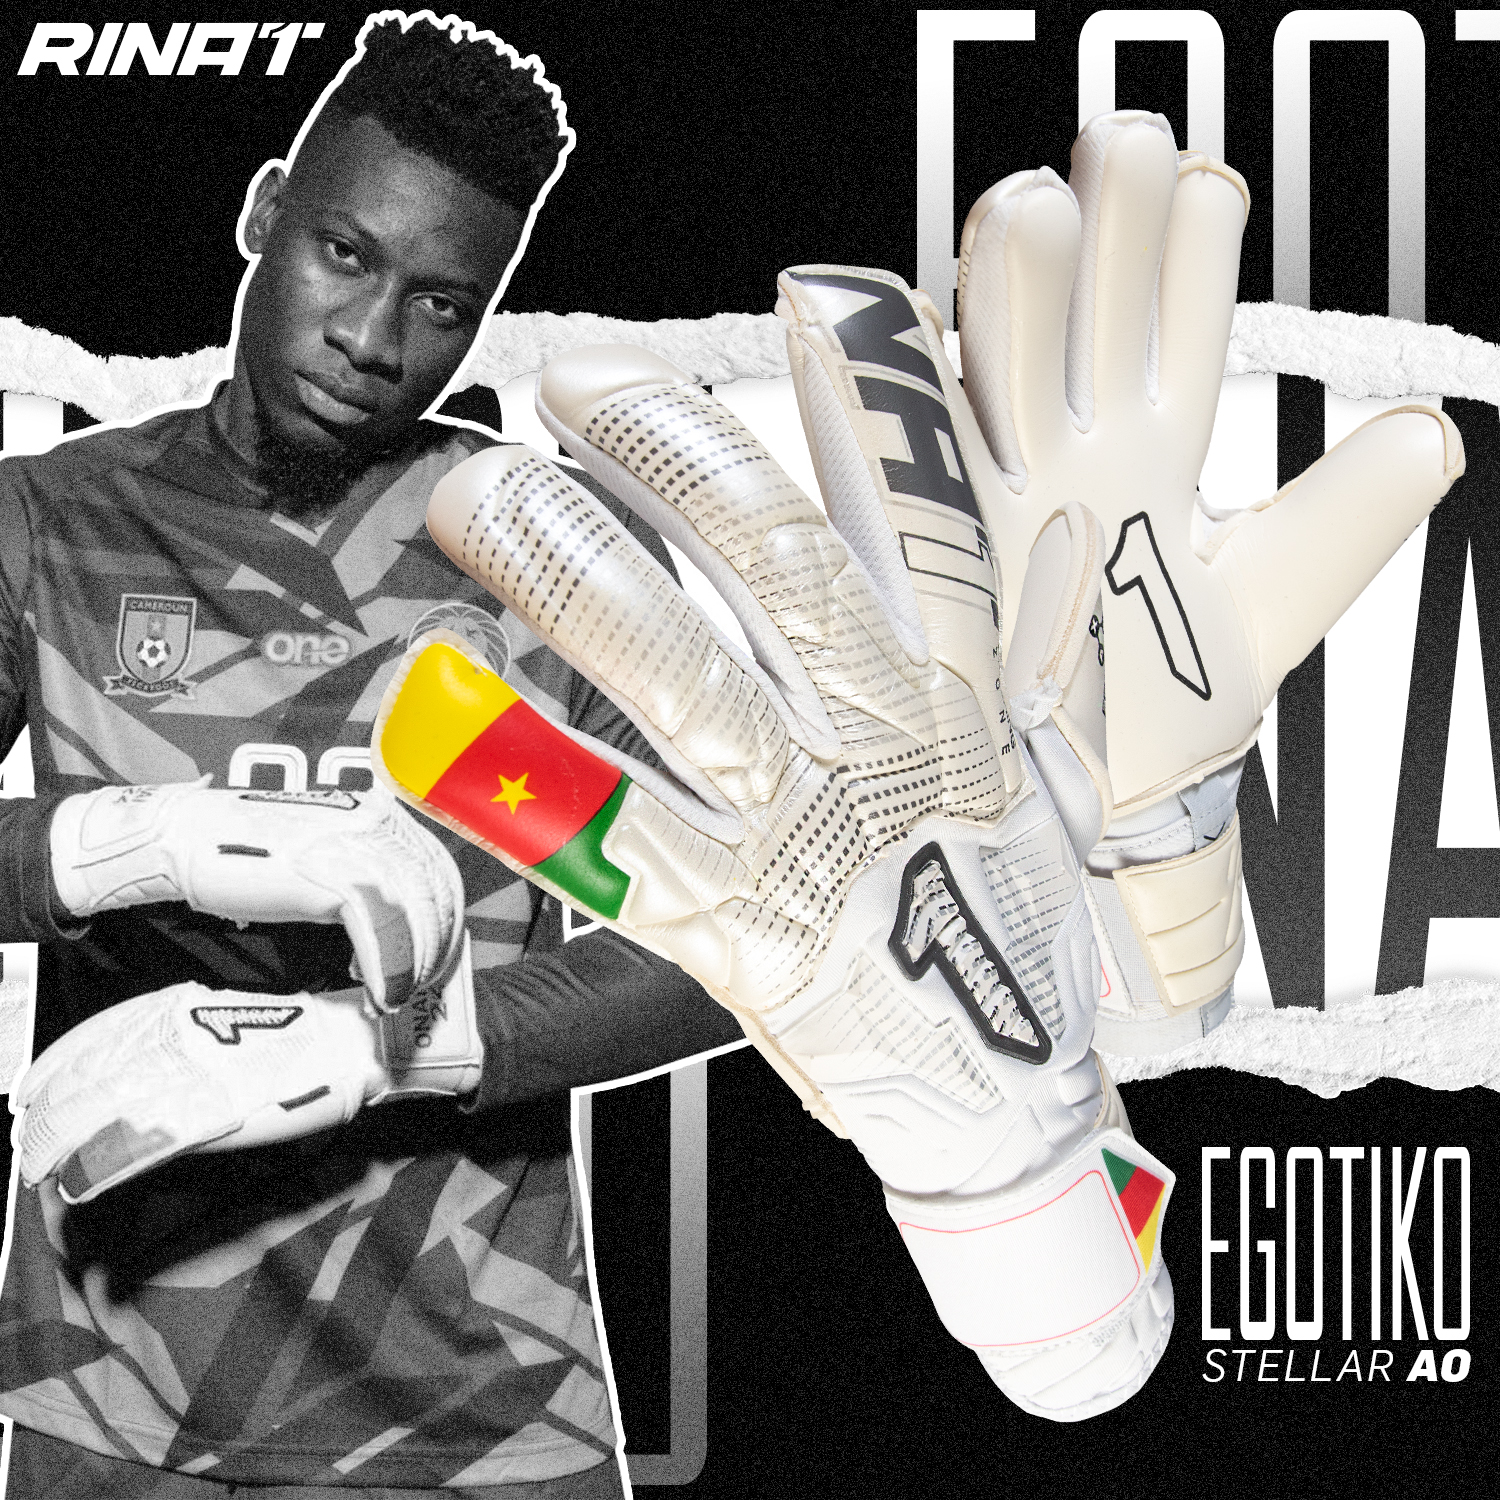 Rinat Egotiko Stellar Training Goalkeeper Gloves White